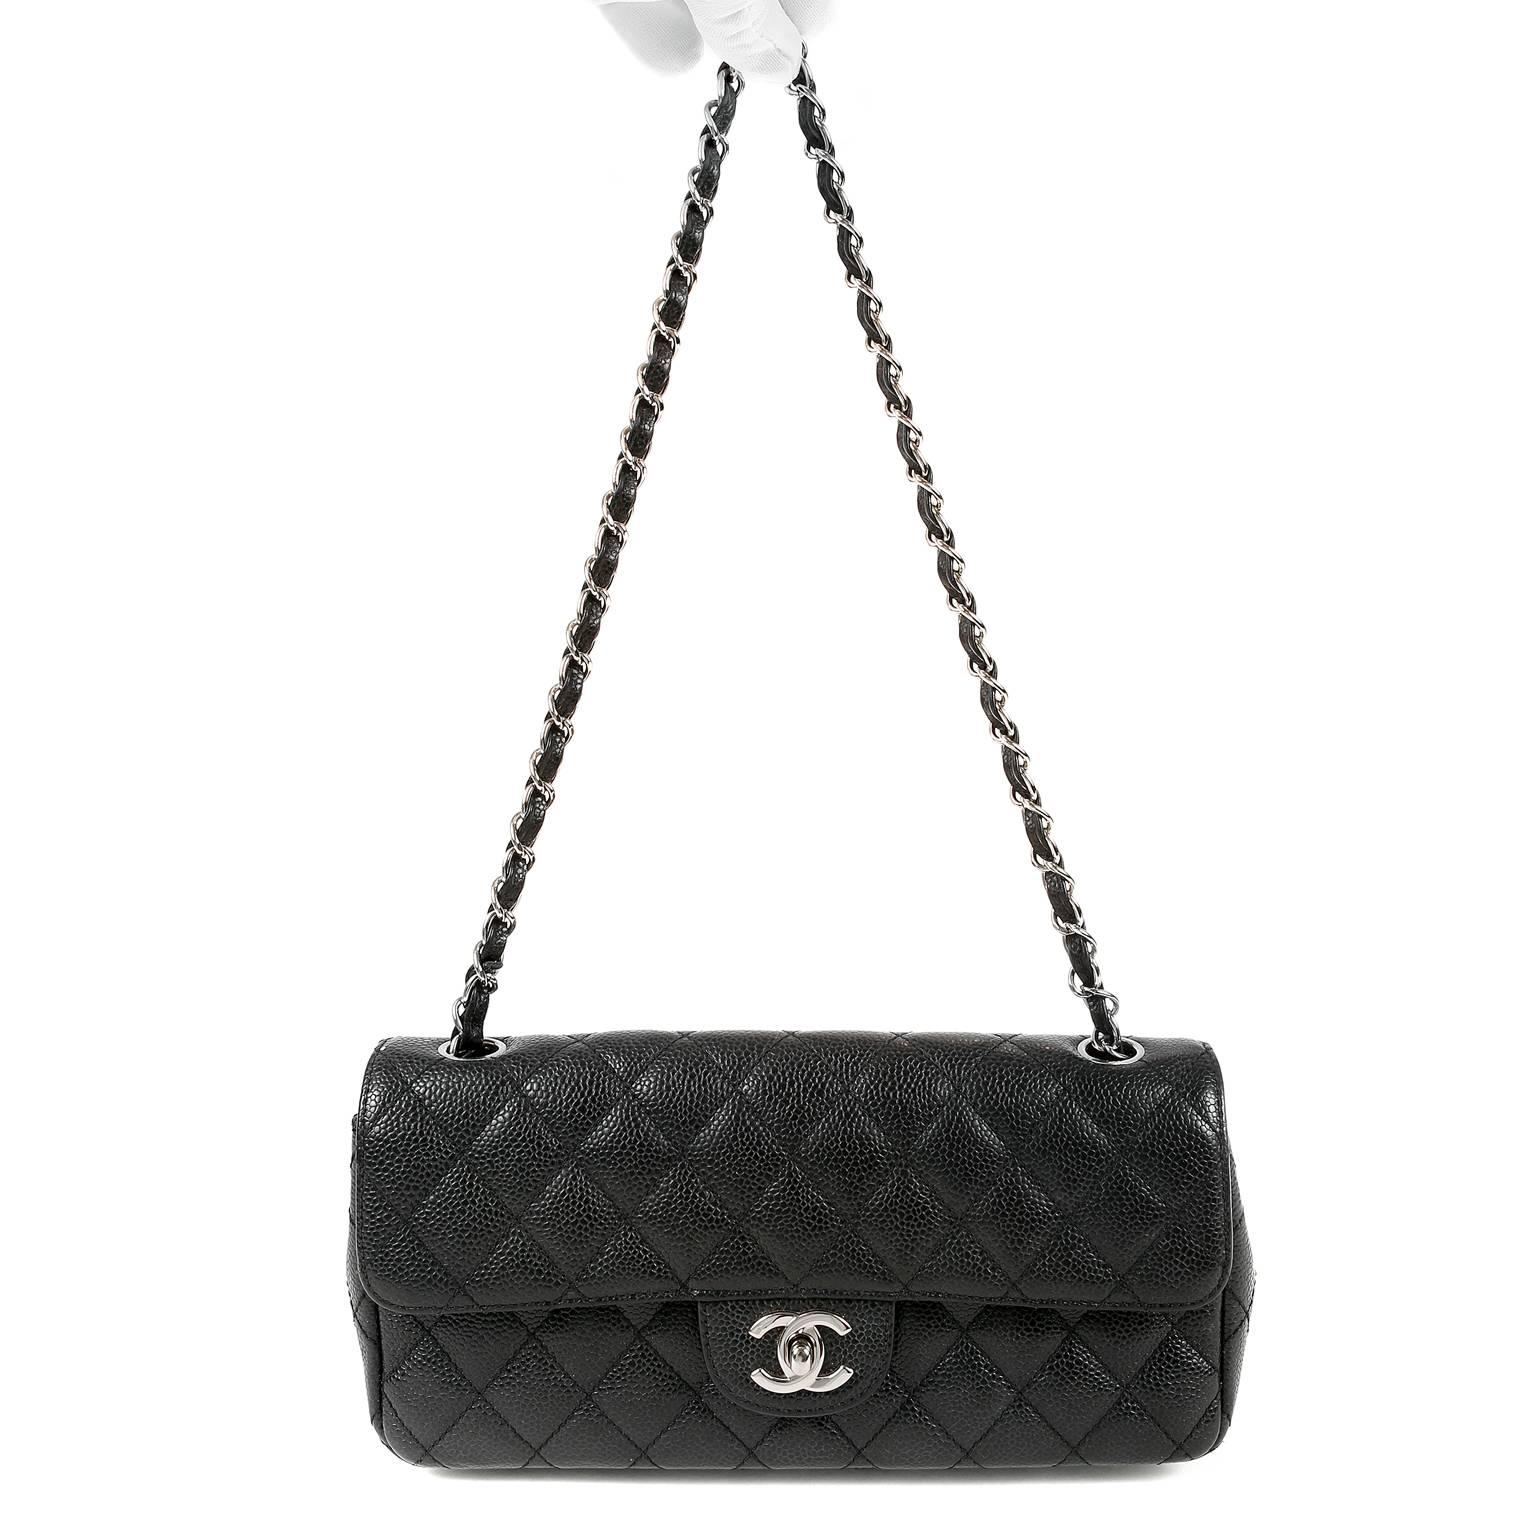 Chanel Black Caviar Leather East West Flap Bag 6